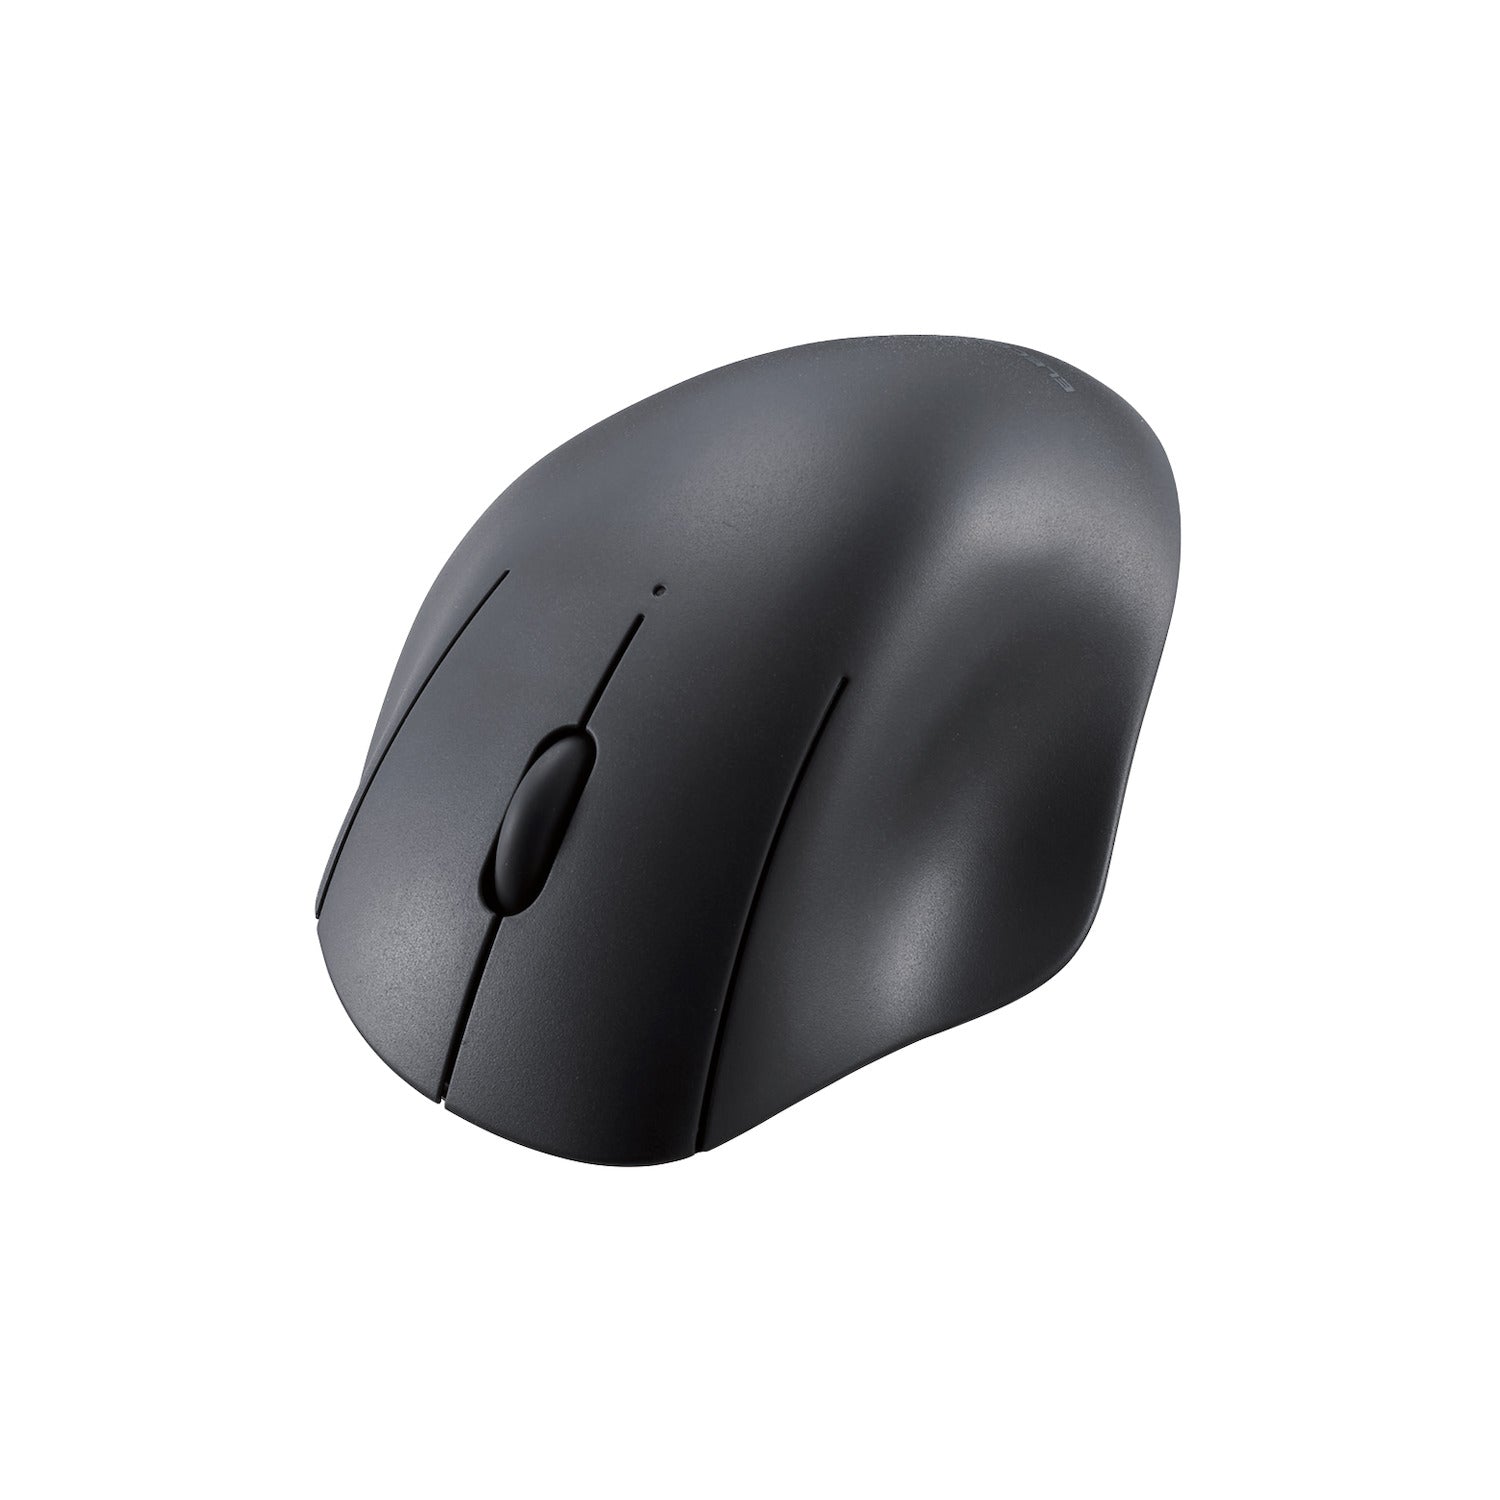 SH10 Ergonomic Mouse - Bluetooth